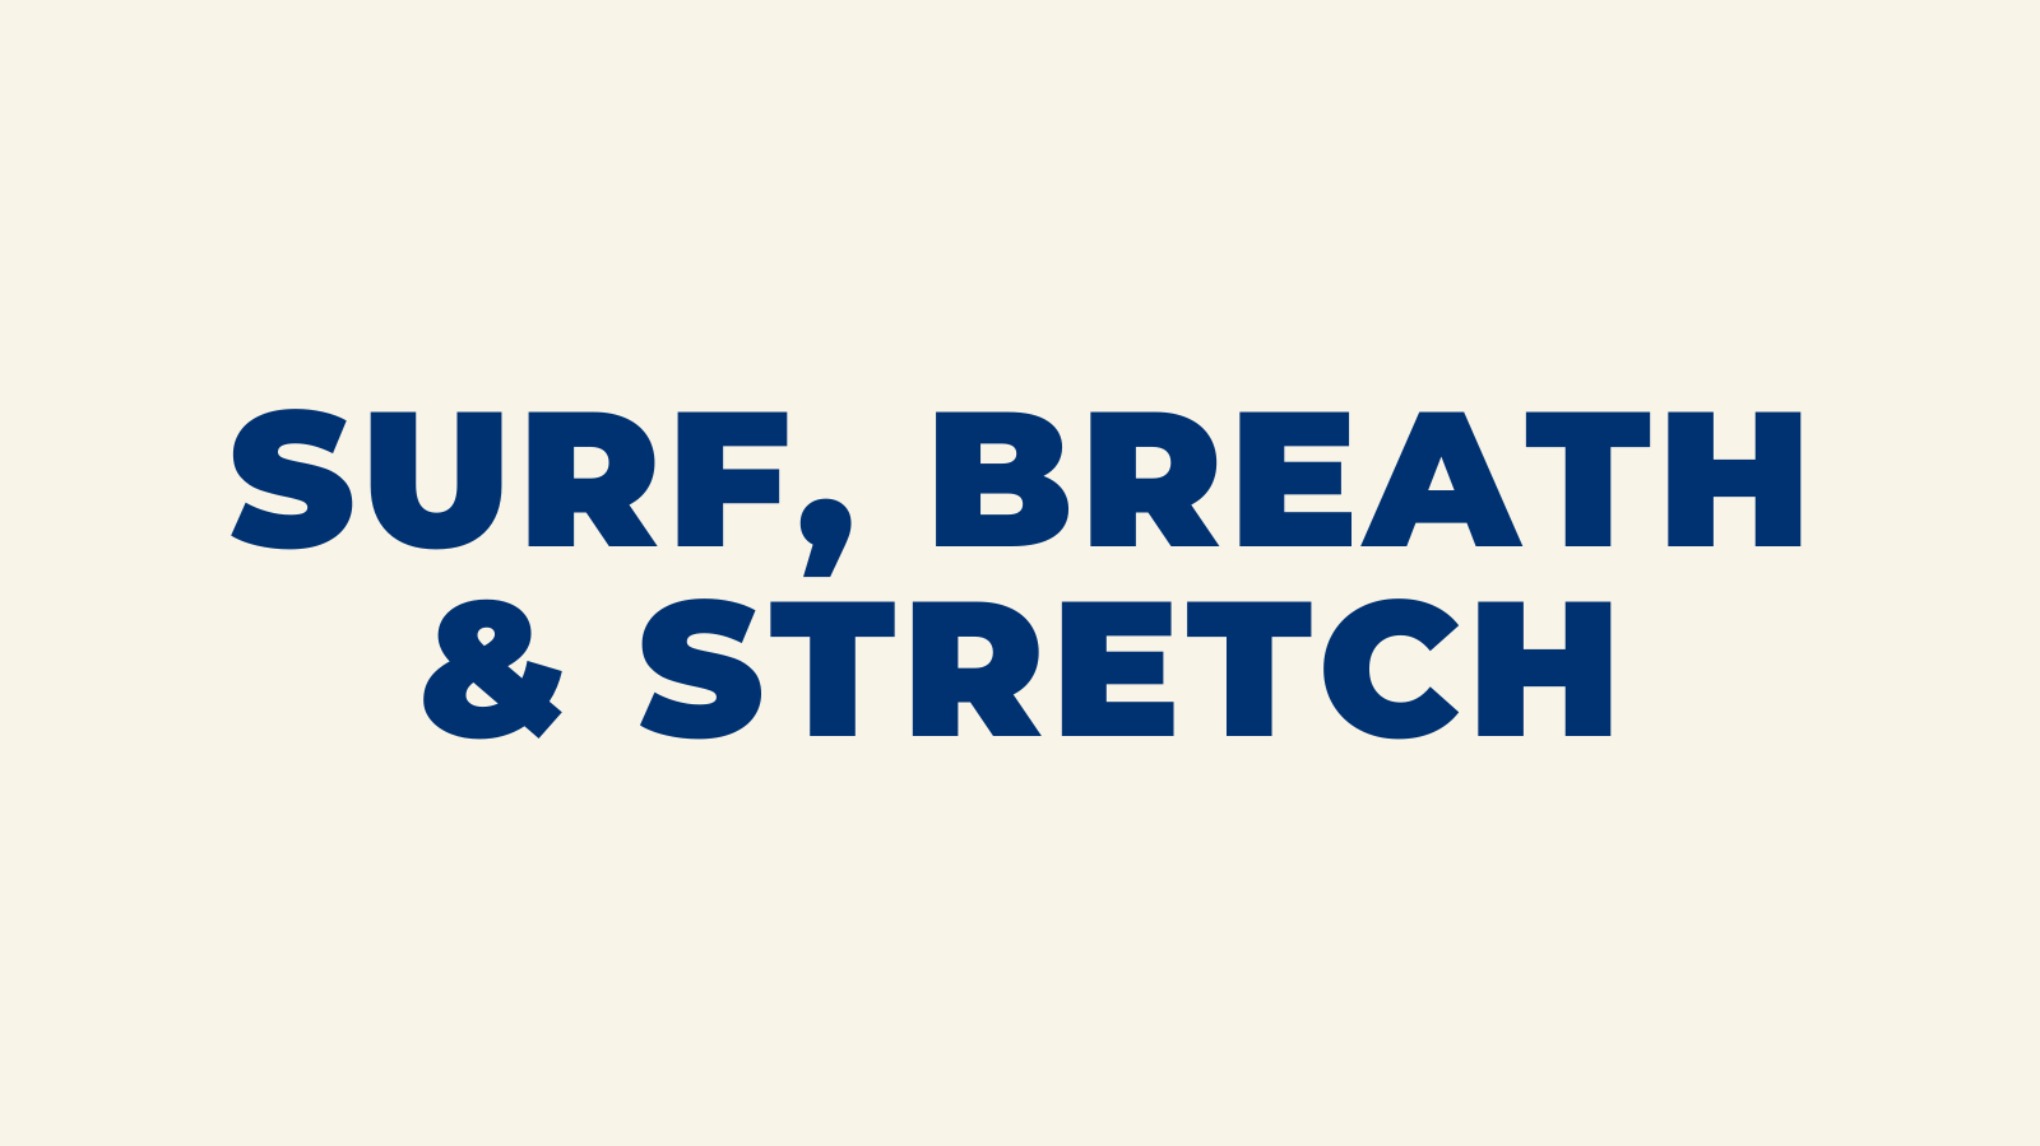 Surf, breath and stretch